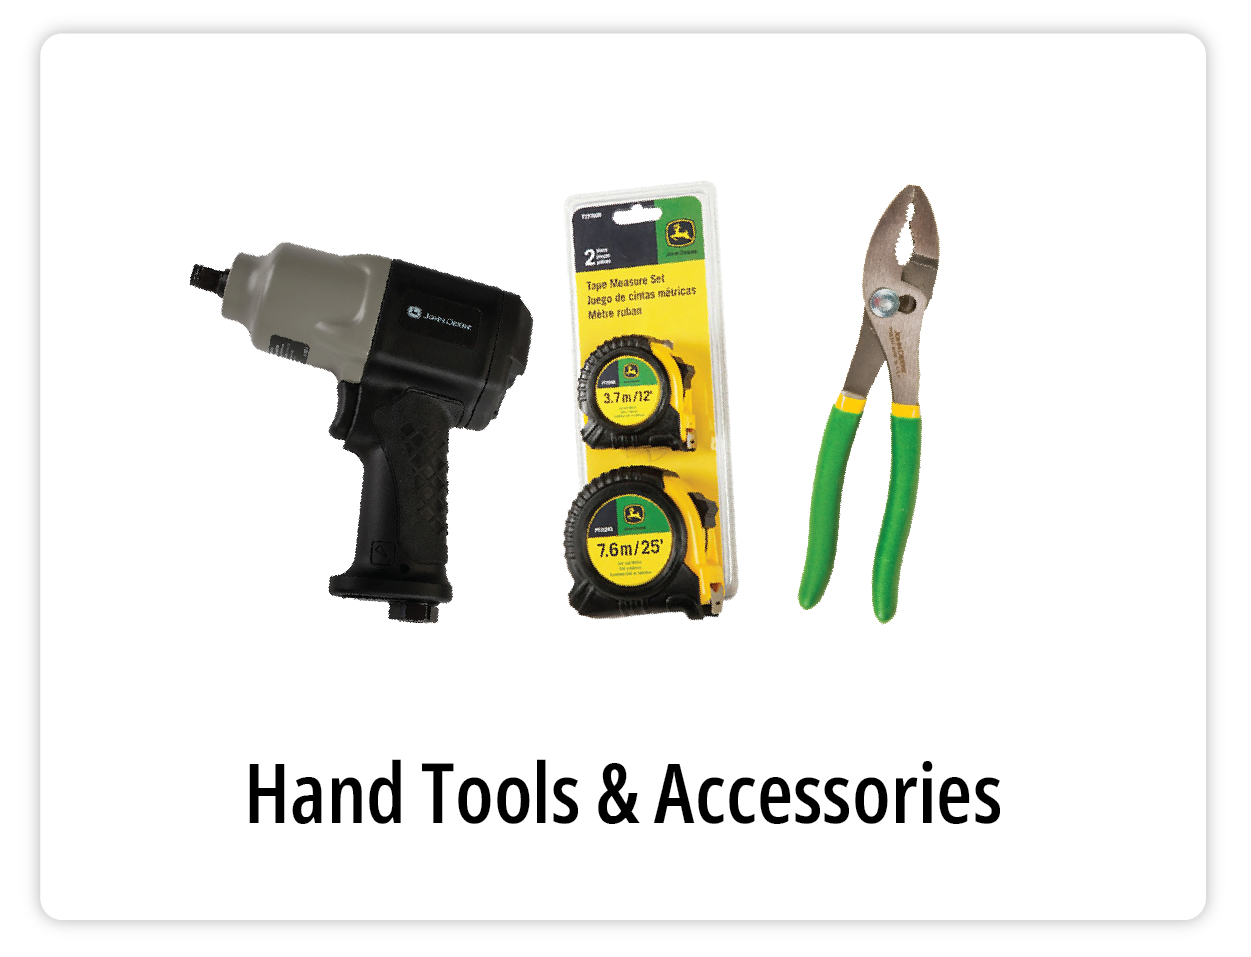 John Deere Tools and Accessories